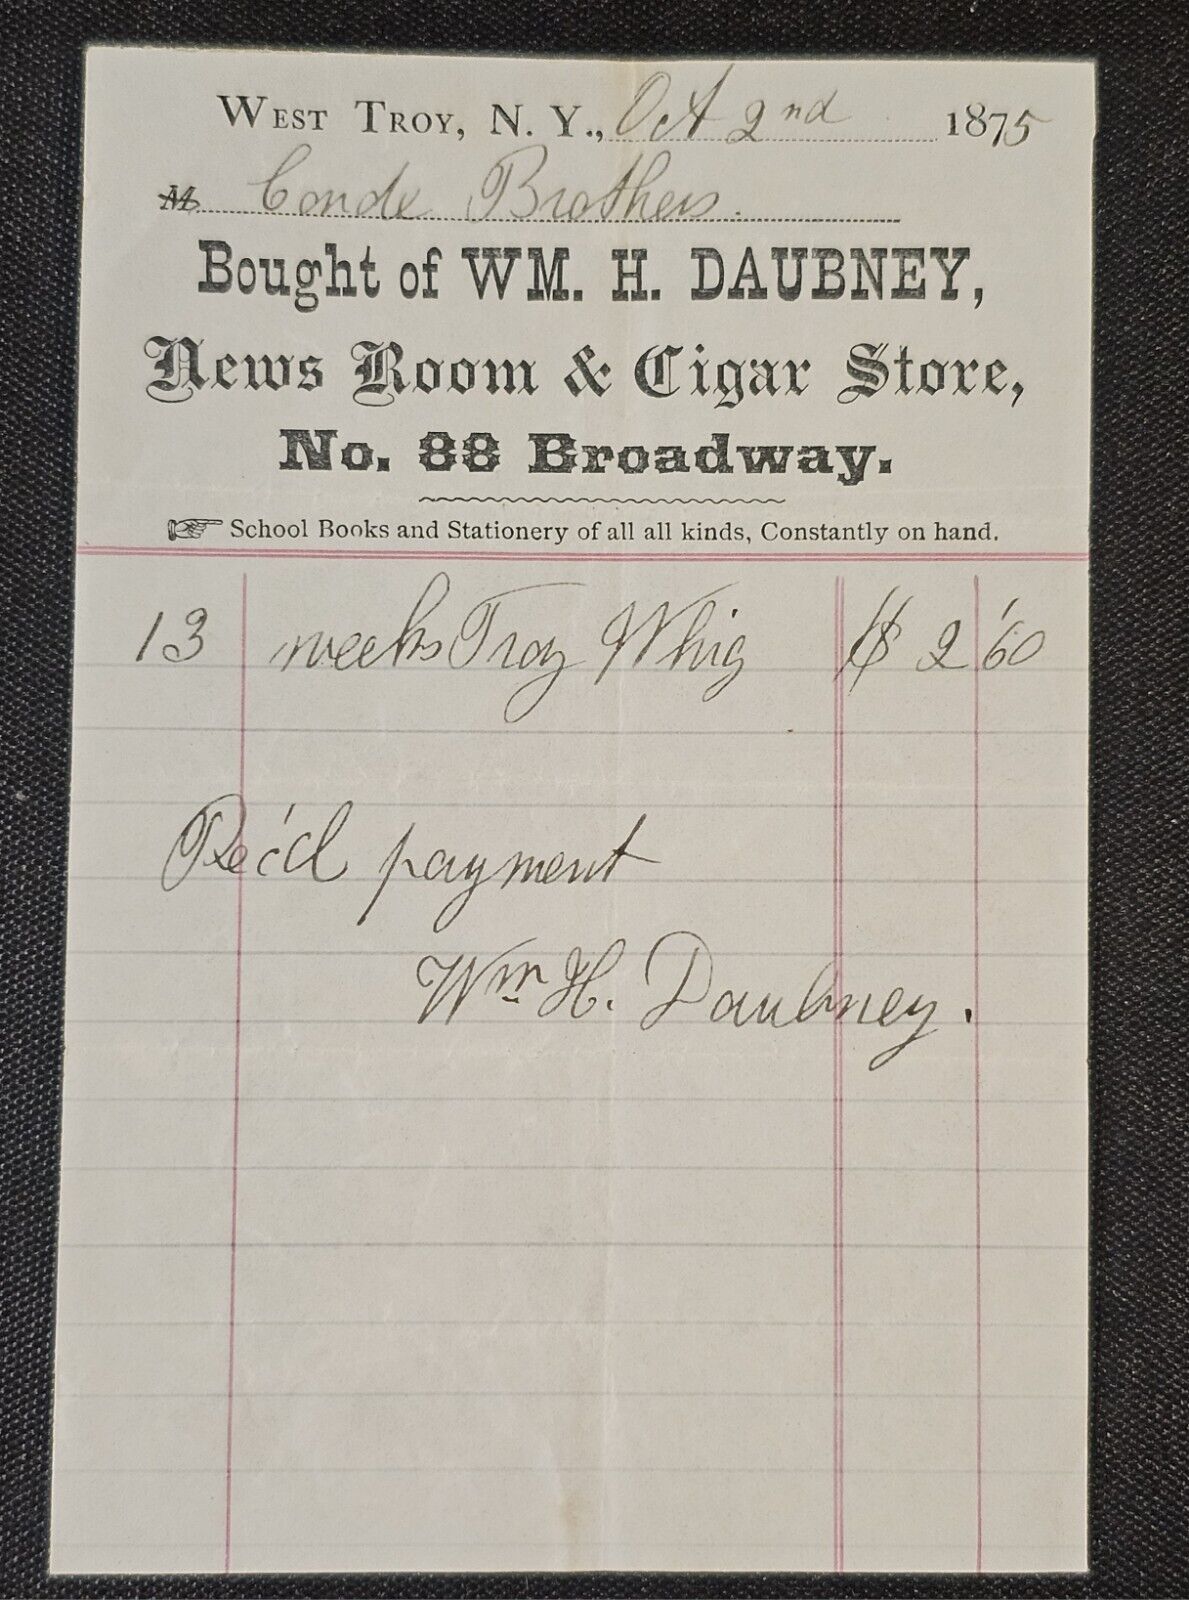 1875 Wm H Daubney News Room & Cigar Store Small Billhead Receipt West Troy, NY